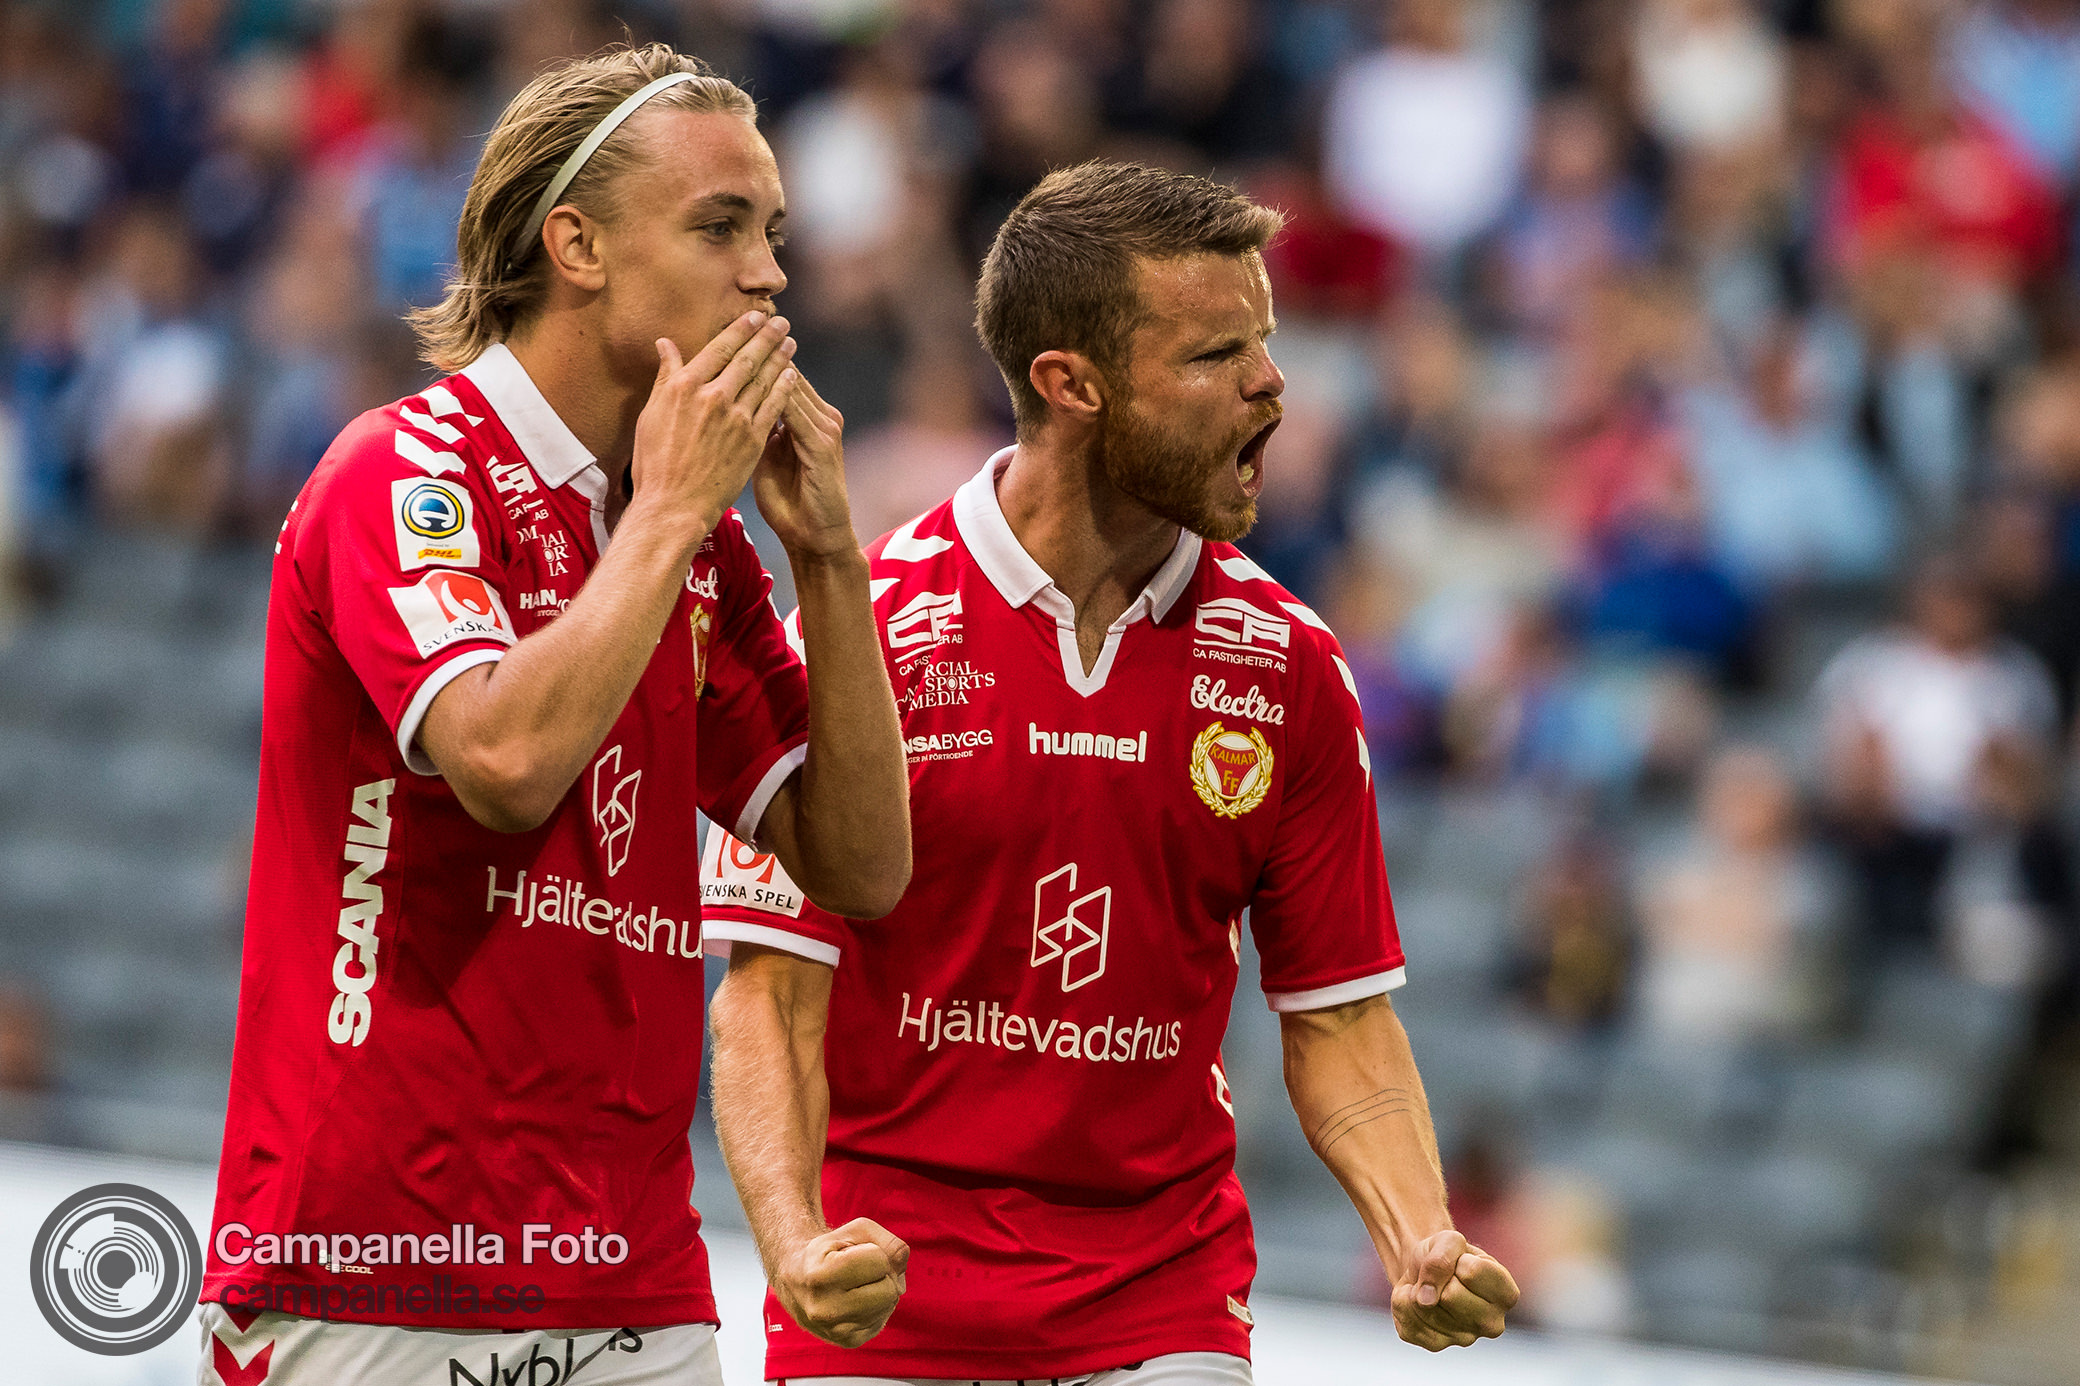 Djurgårdens IF 0 - 2 Kalmar FF (2018-08-19) - Michael Campanella Photography